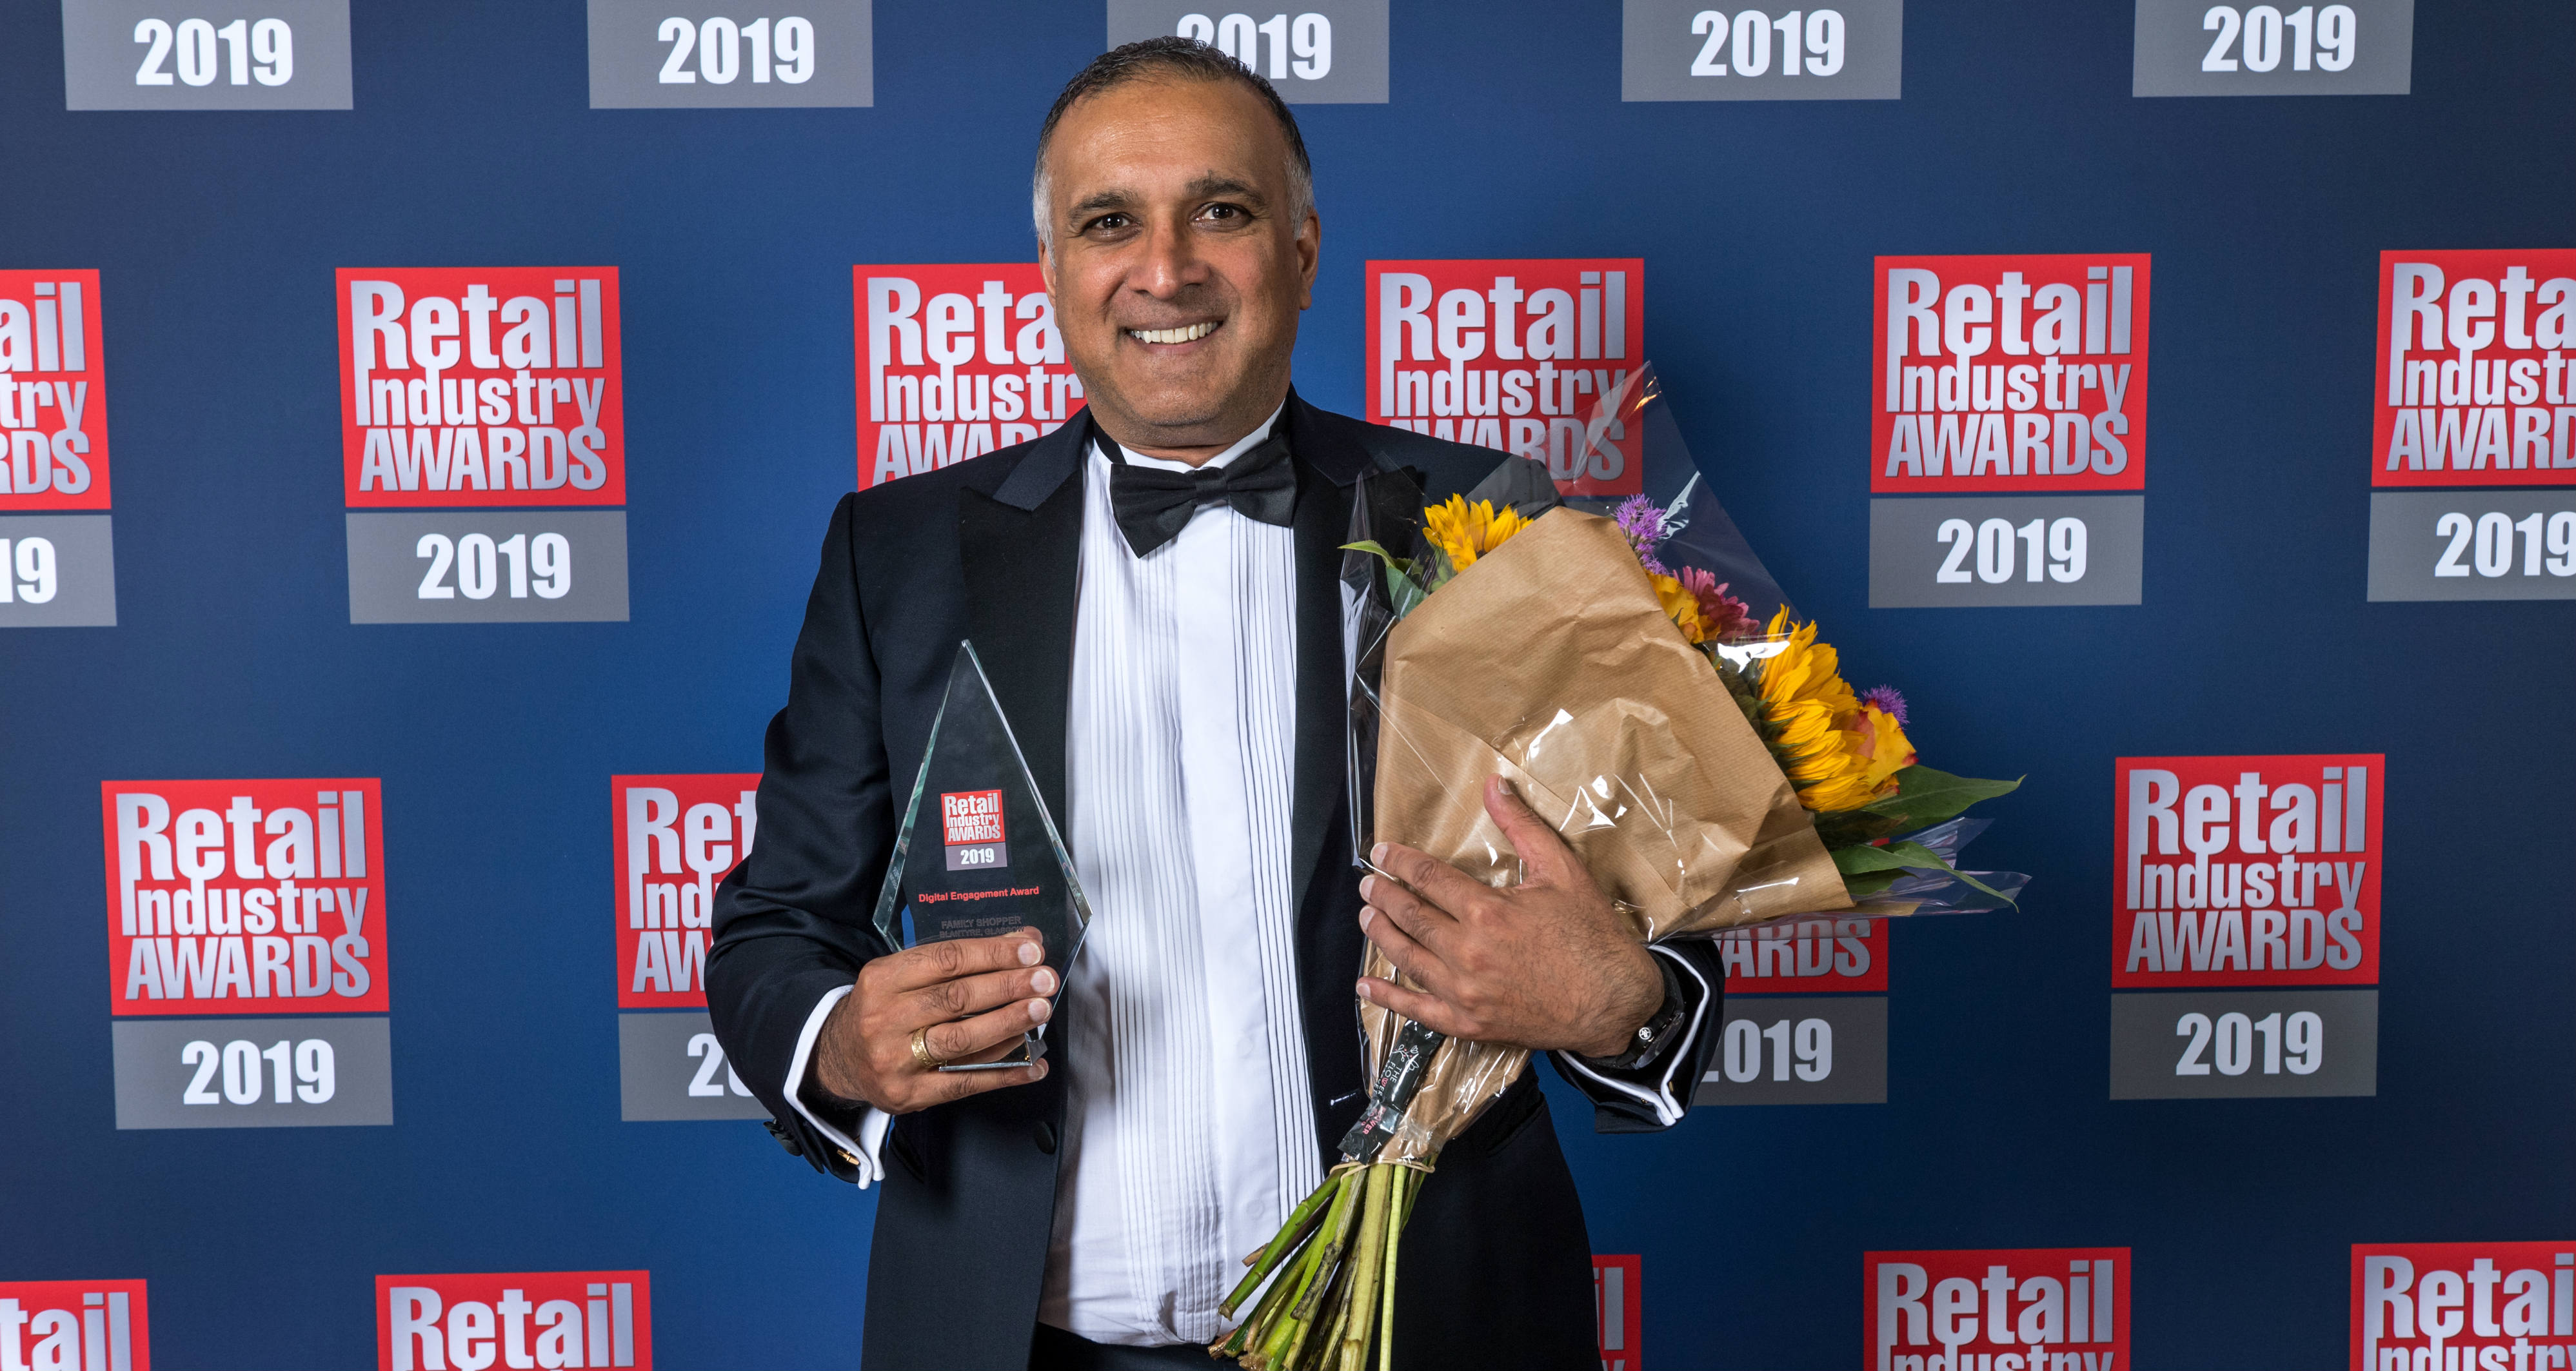 RIA 2019 winner Digital Engagement Award